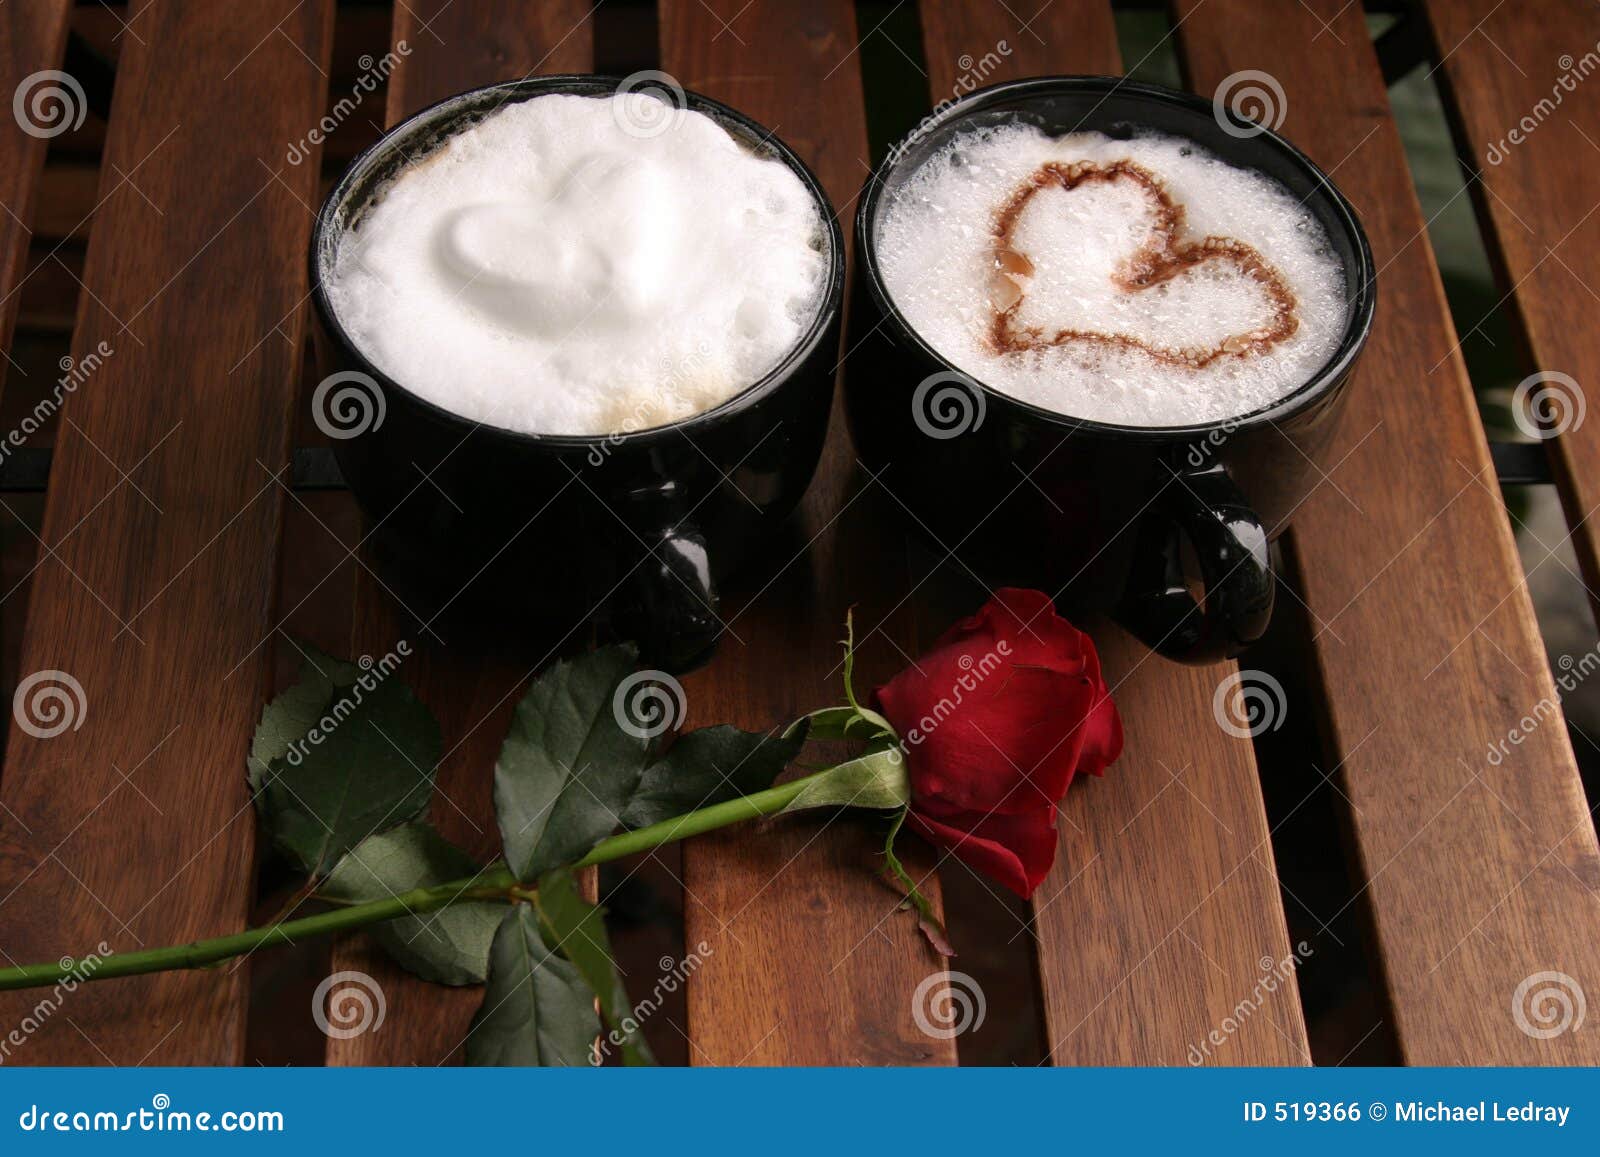 two romantic coffees